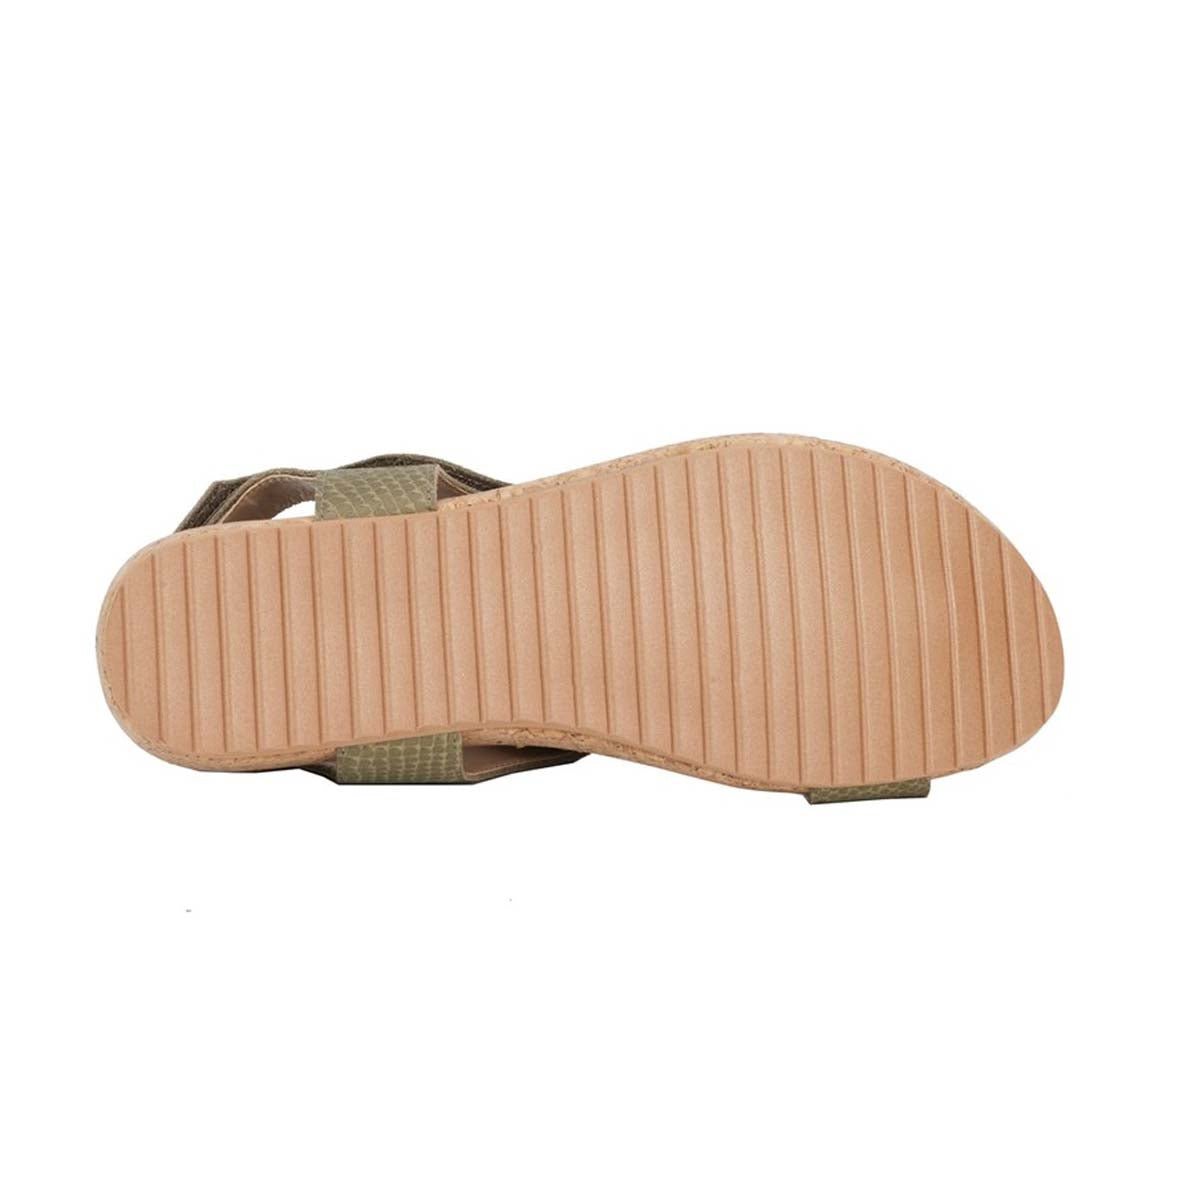 ROS HOMMERSON PRESTON WOMEN'S ADJUSTABLE STRAPS SANDAL IN OLIVE - TLW Shoes